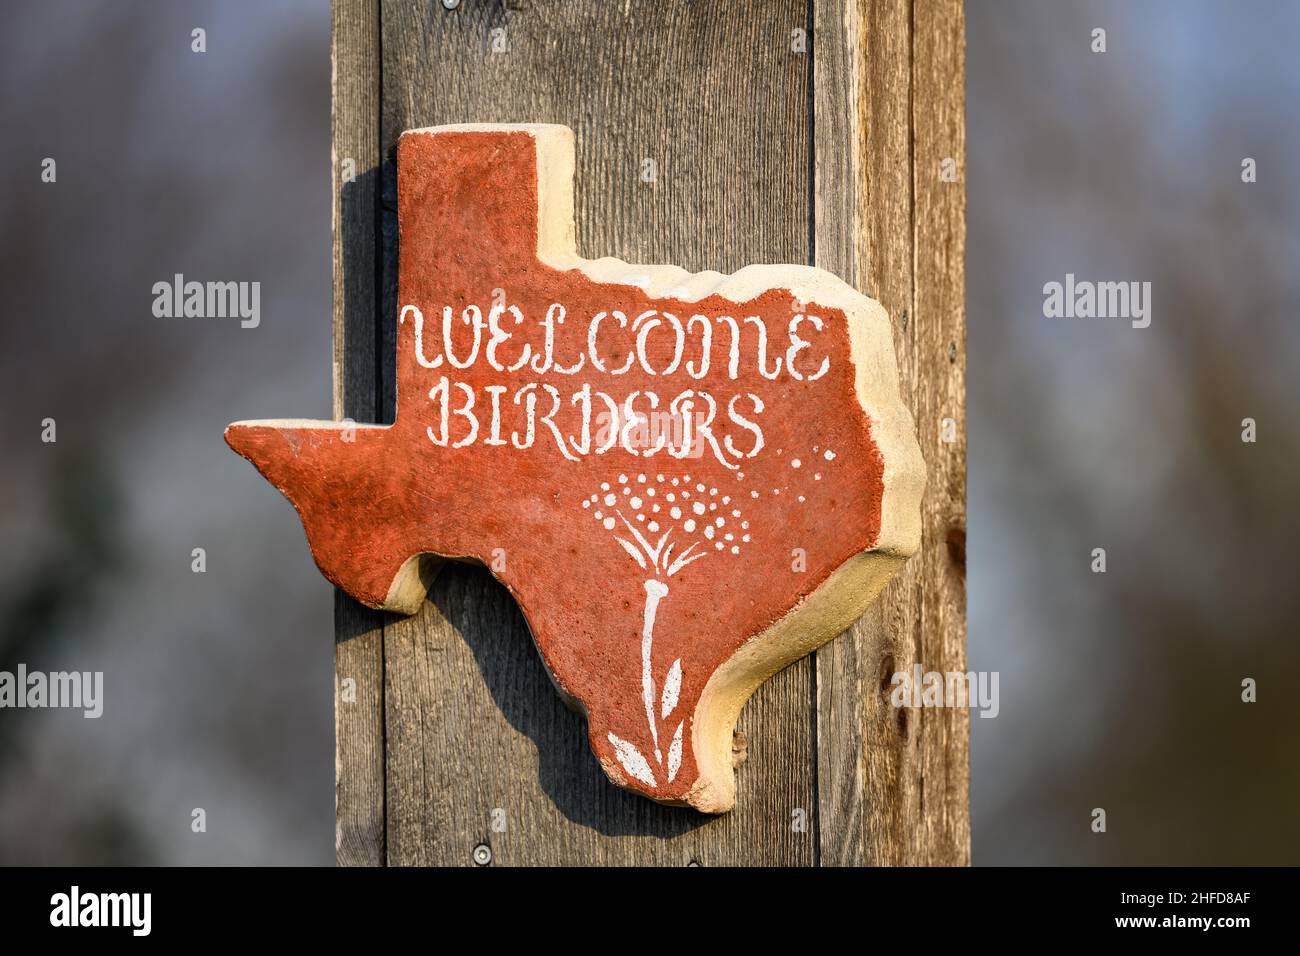 Welcome Birders on a Texas shaped sign. McAllen, Texas, USA. Stock Photo